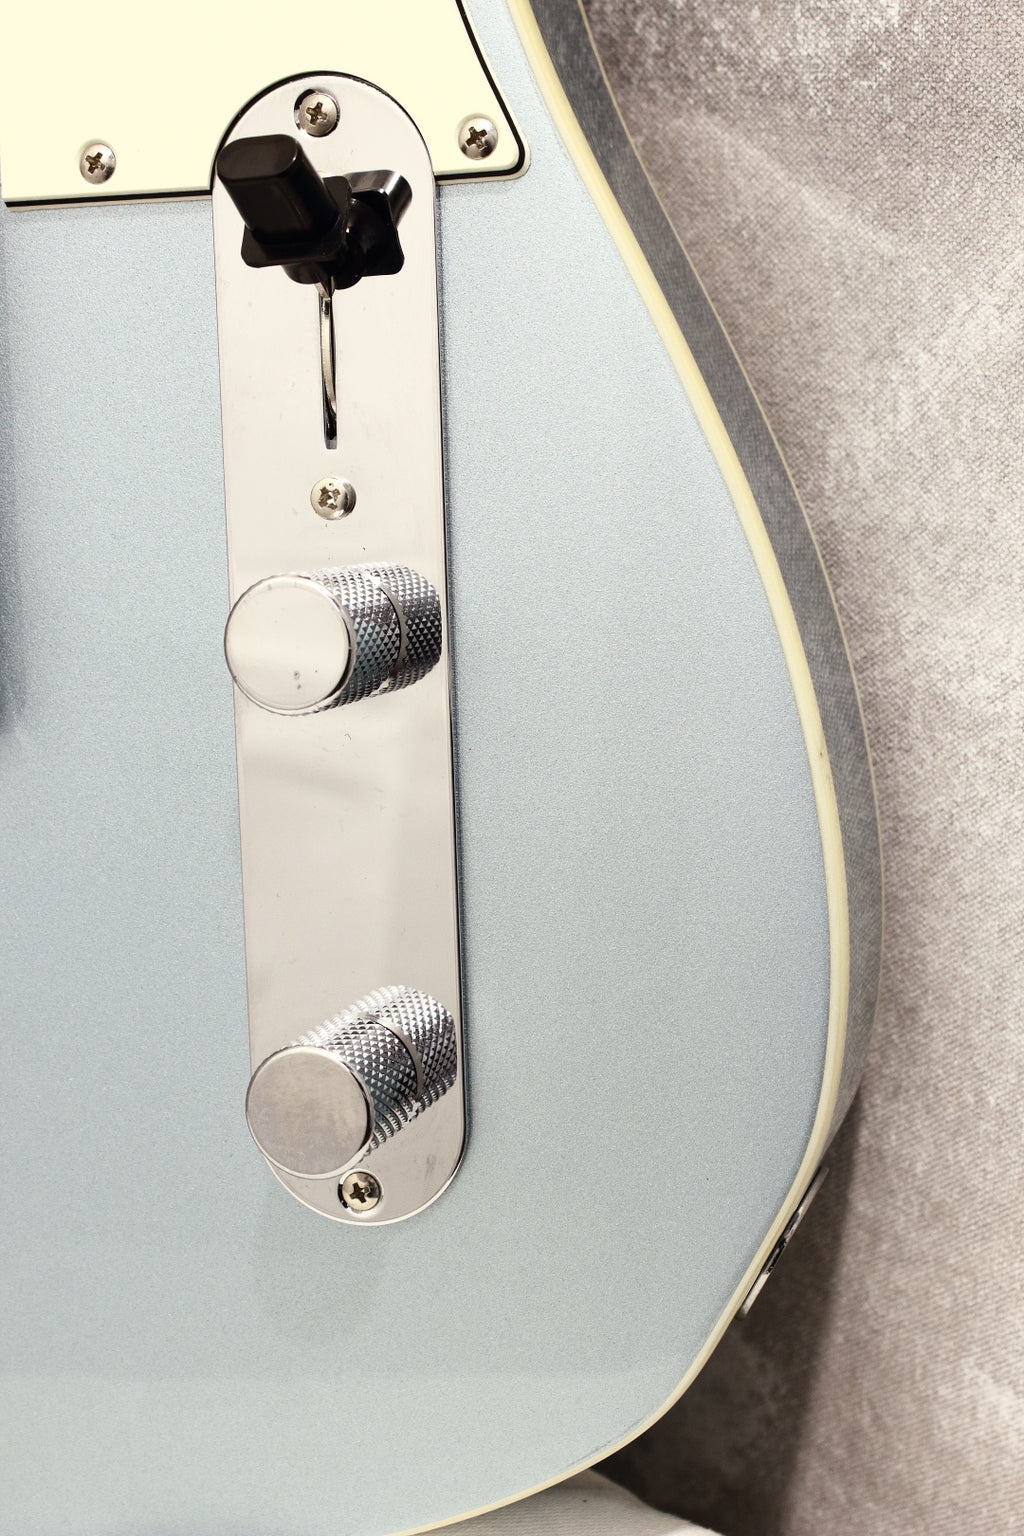 Fender Japan '62 Telecaster TL62B Bound Ice Blue Metallic 2010